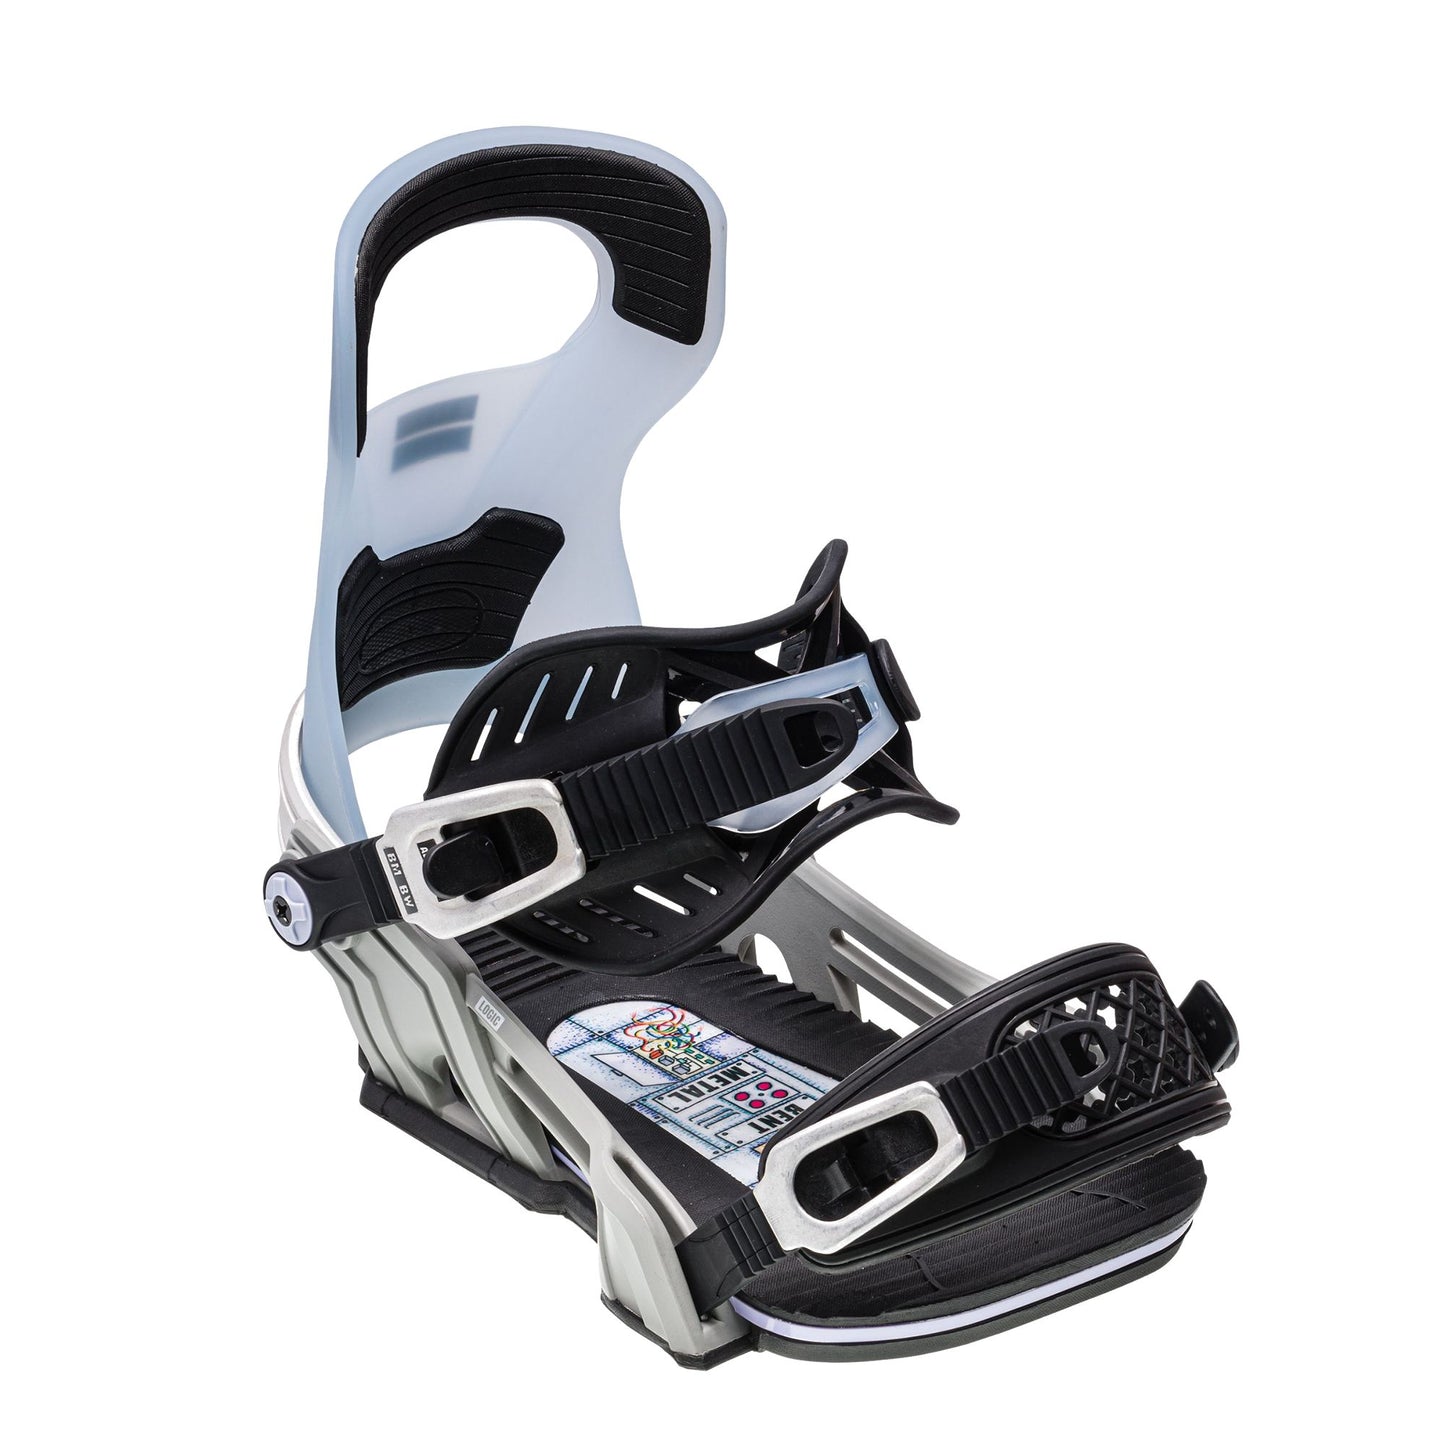 Bent Metal Logic Snowboard Bindings Grey Snowboard Bindings